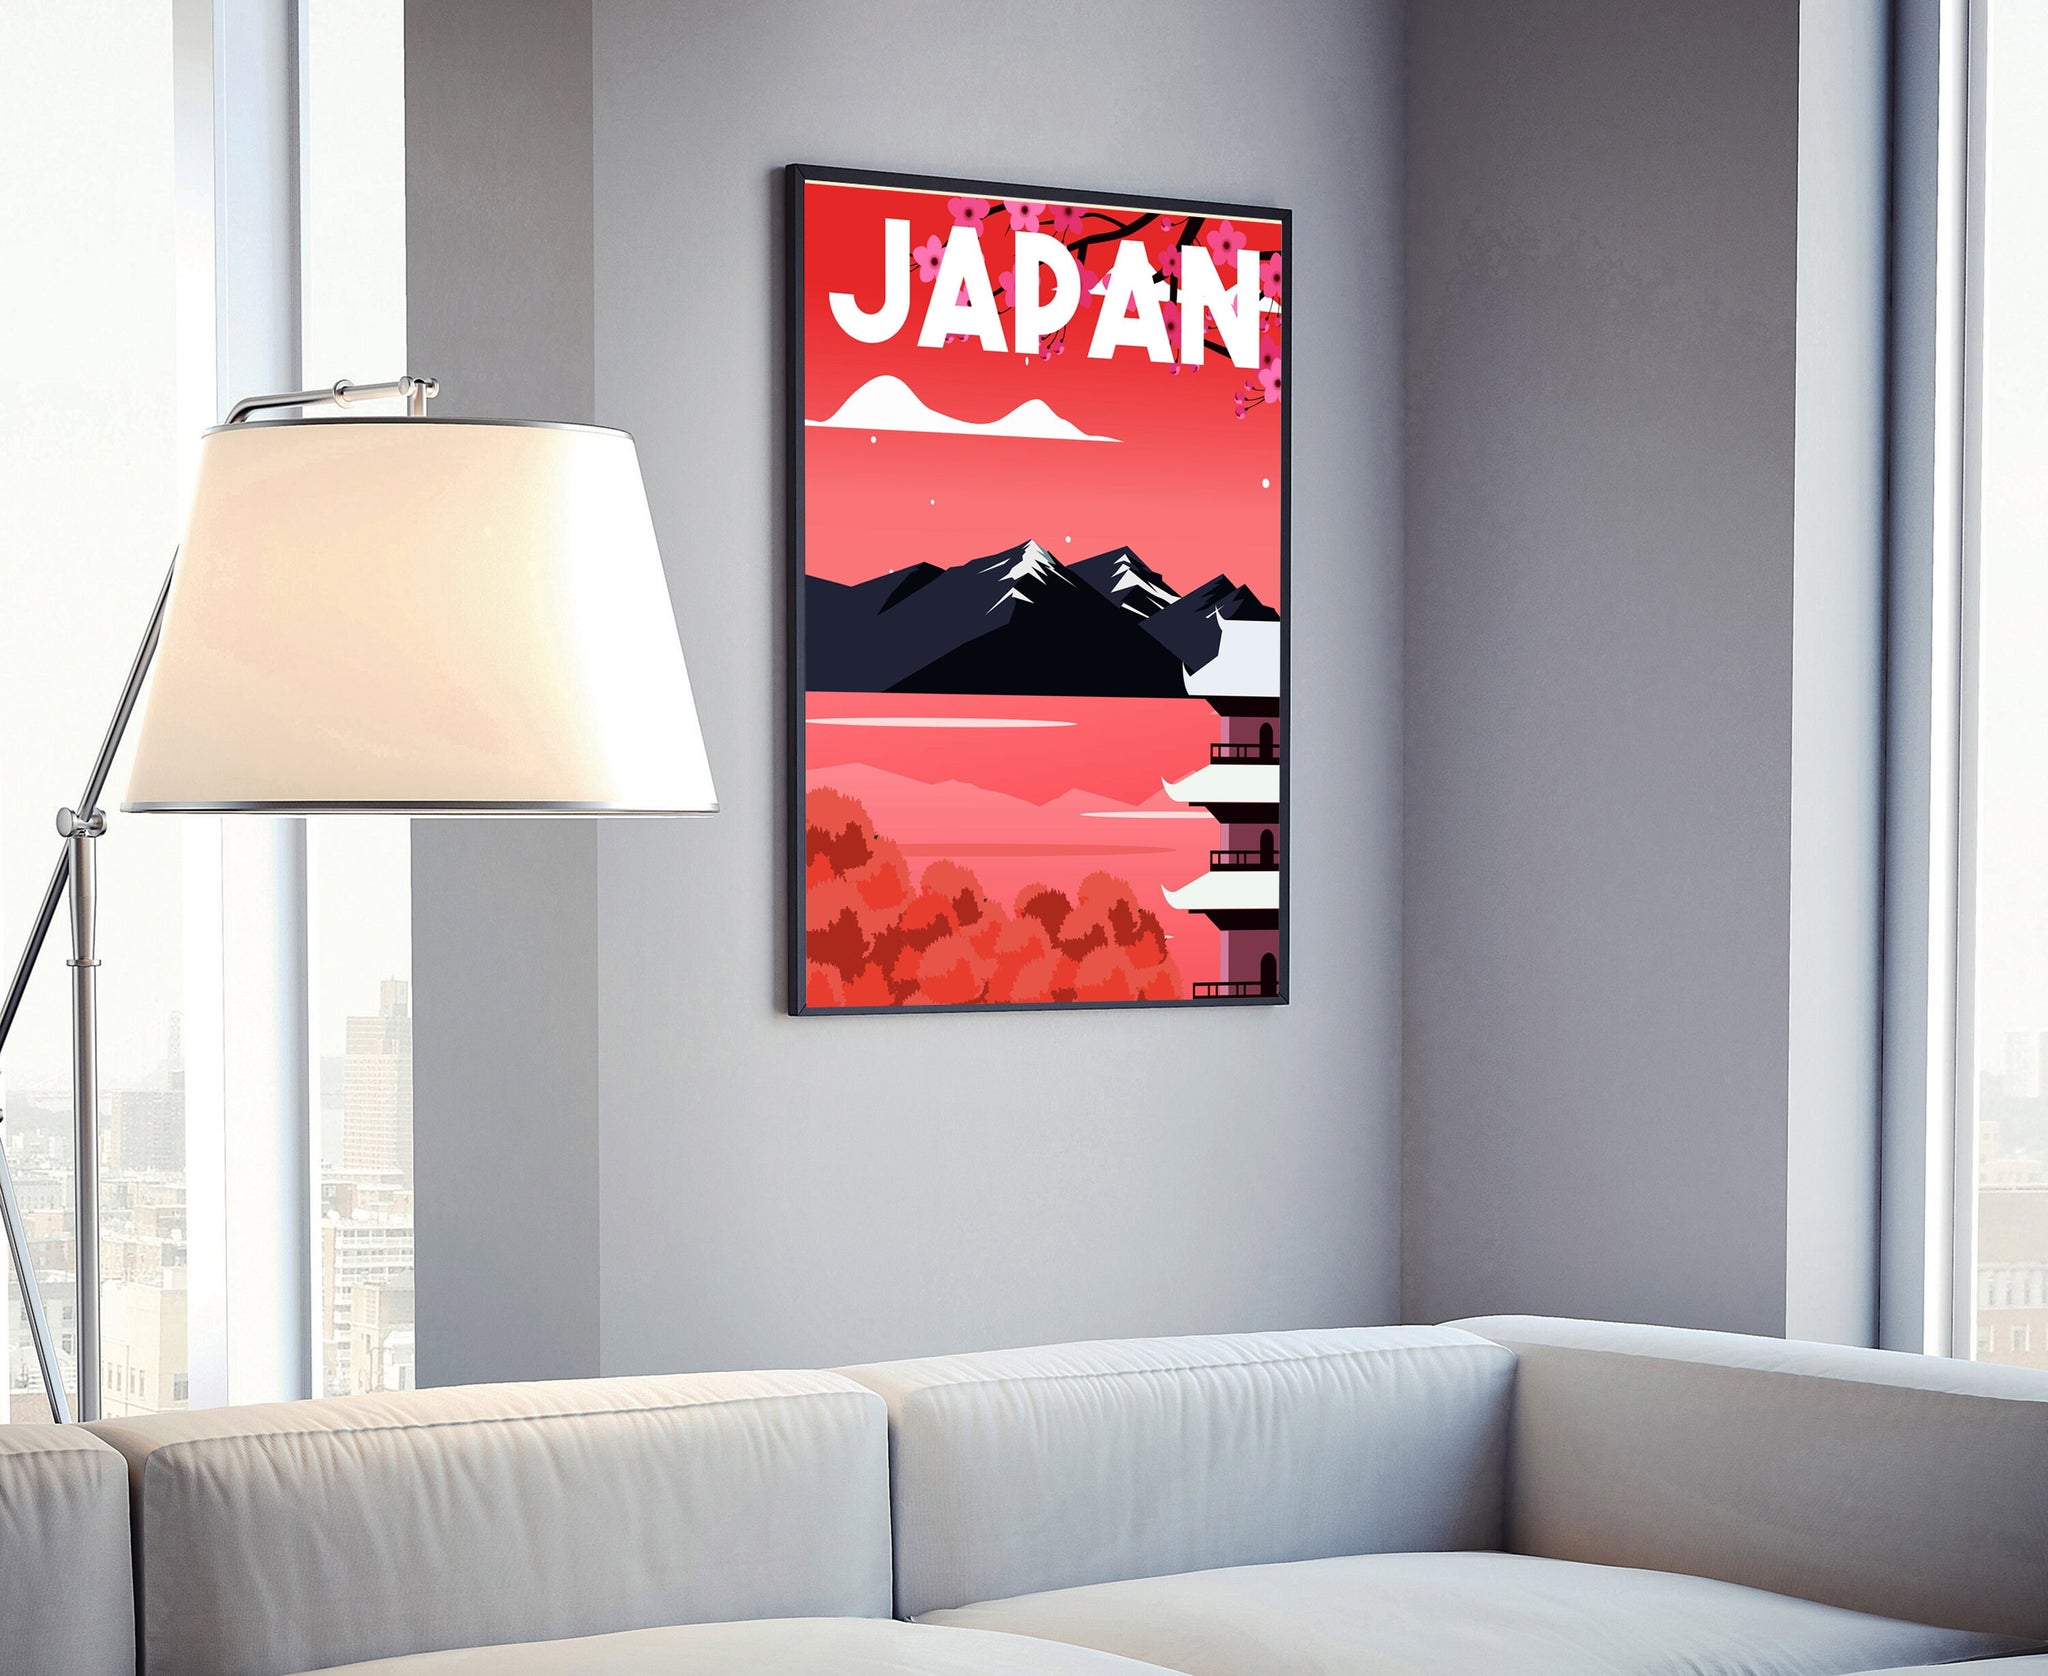 JAPAN travel poster, Japan cityscape poster print, Japan landmark Poster wall art, Home wall art, Office wall decoration, Housewarming gift